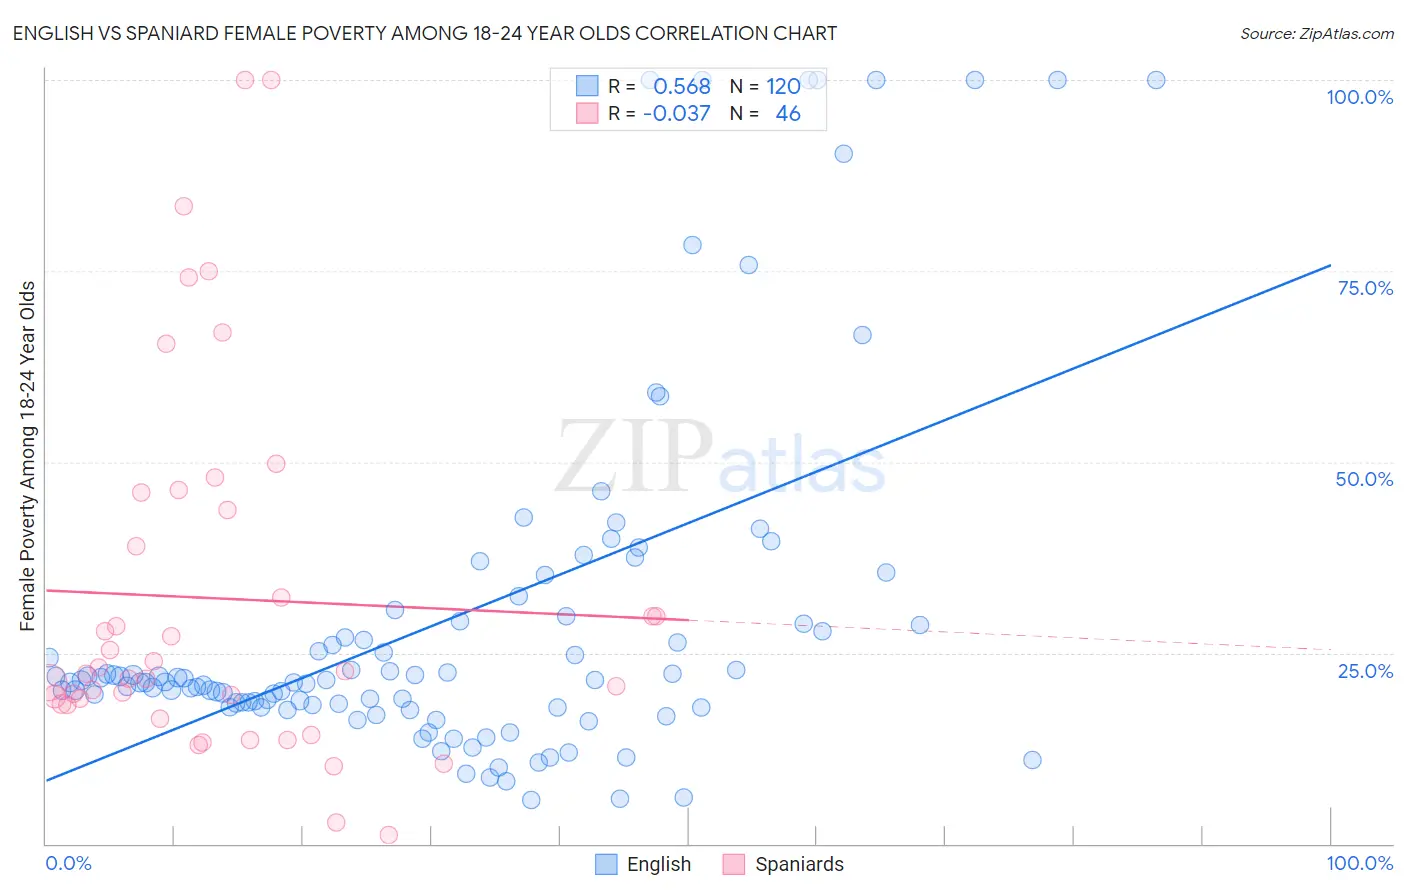 English vs Spaniard Female Poverty Among 18-24 Year Olds